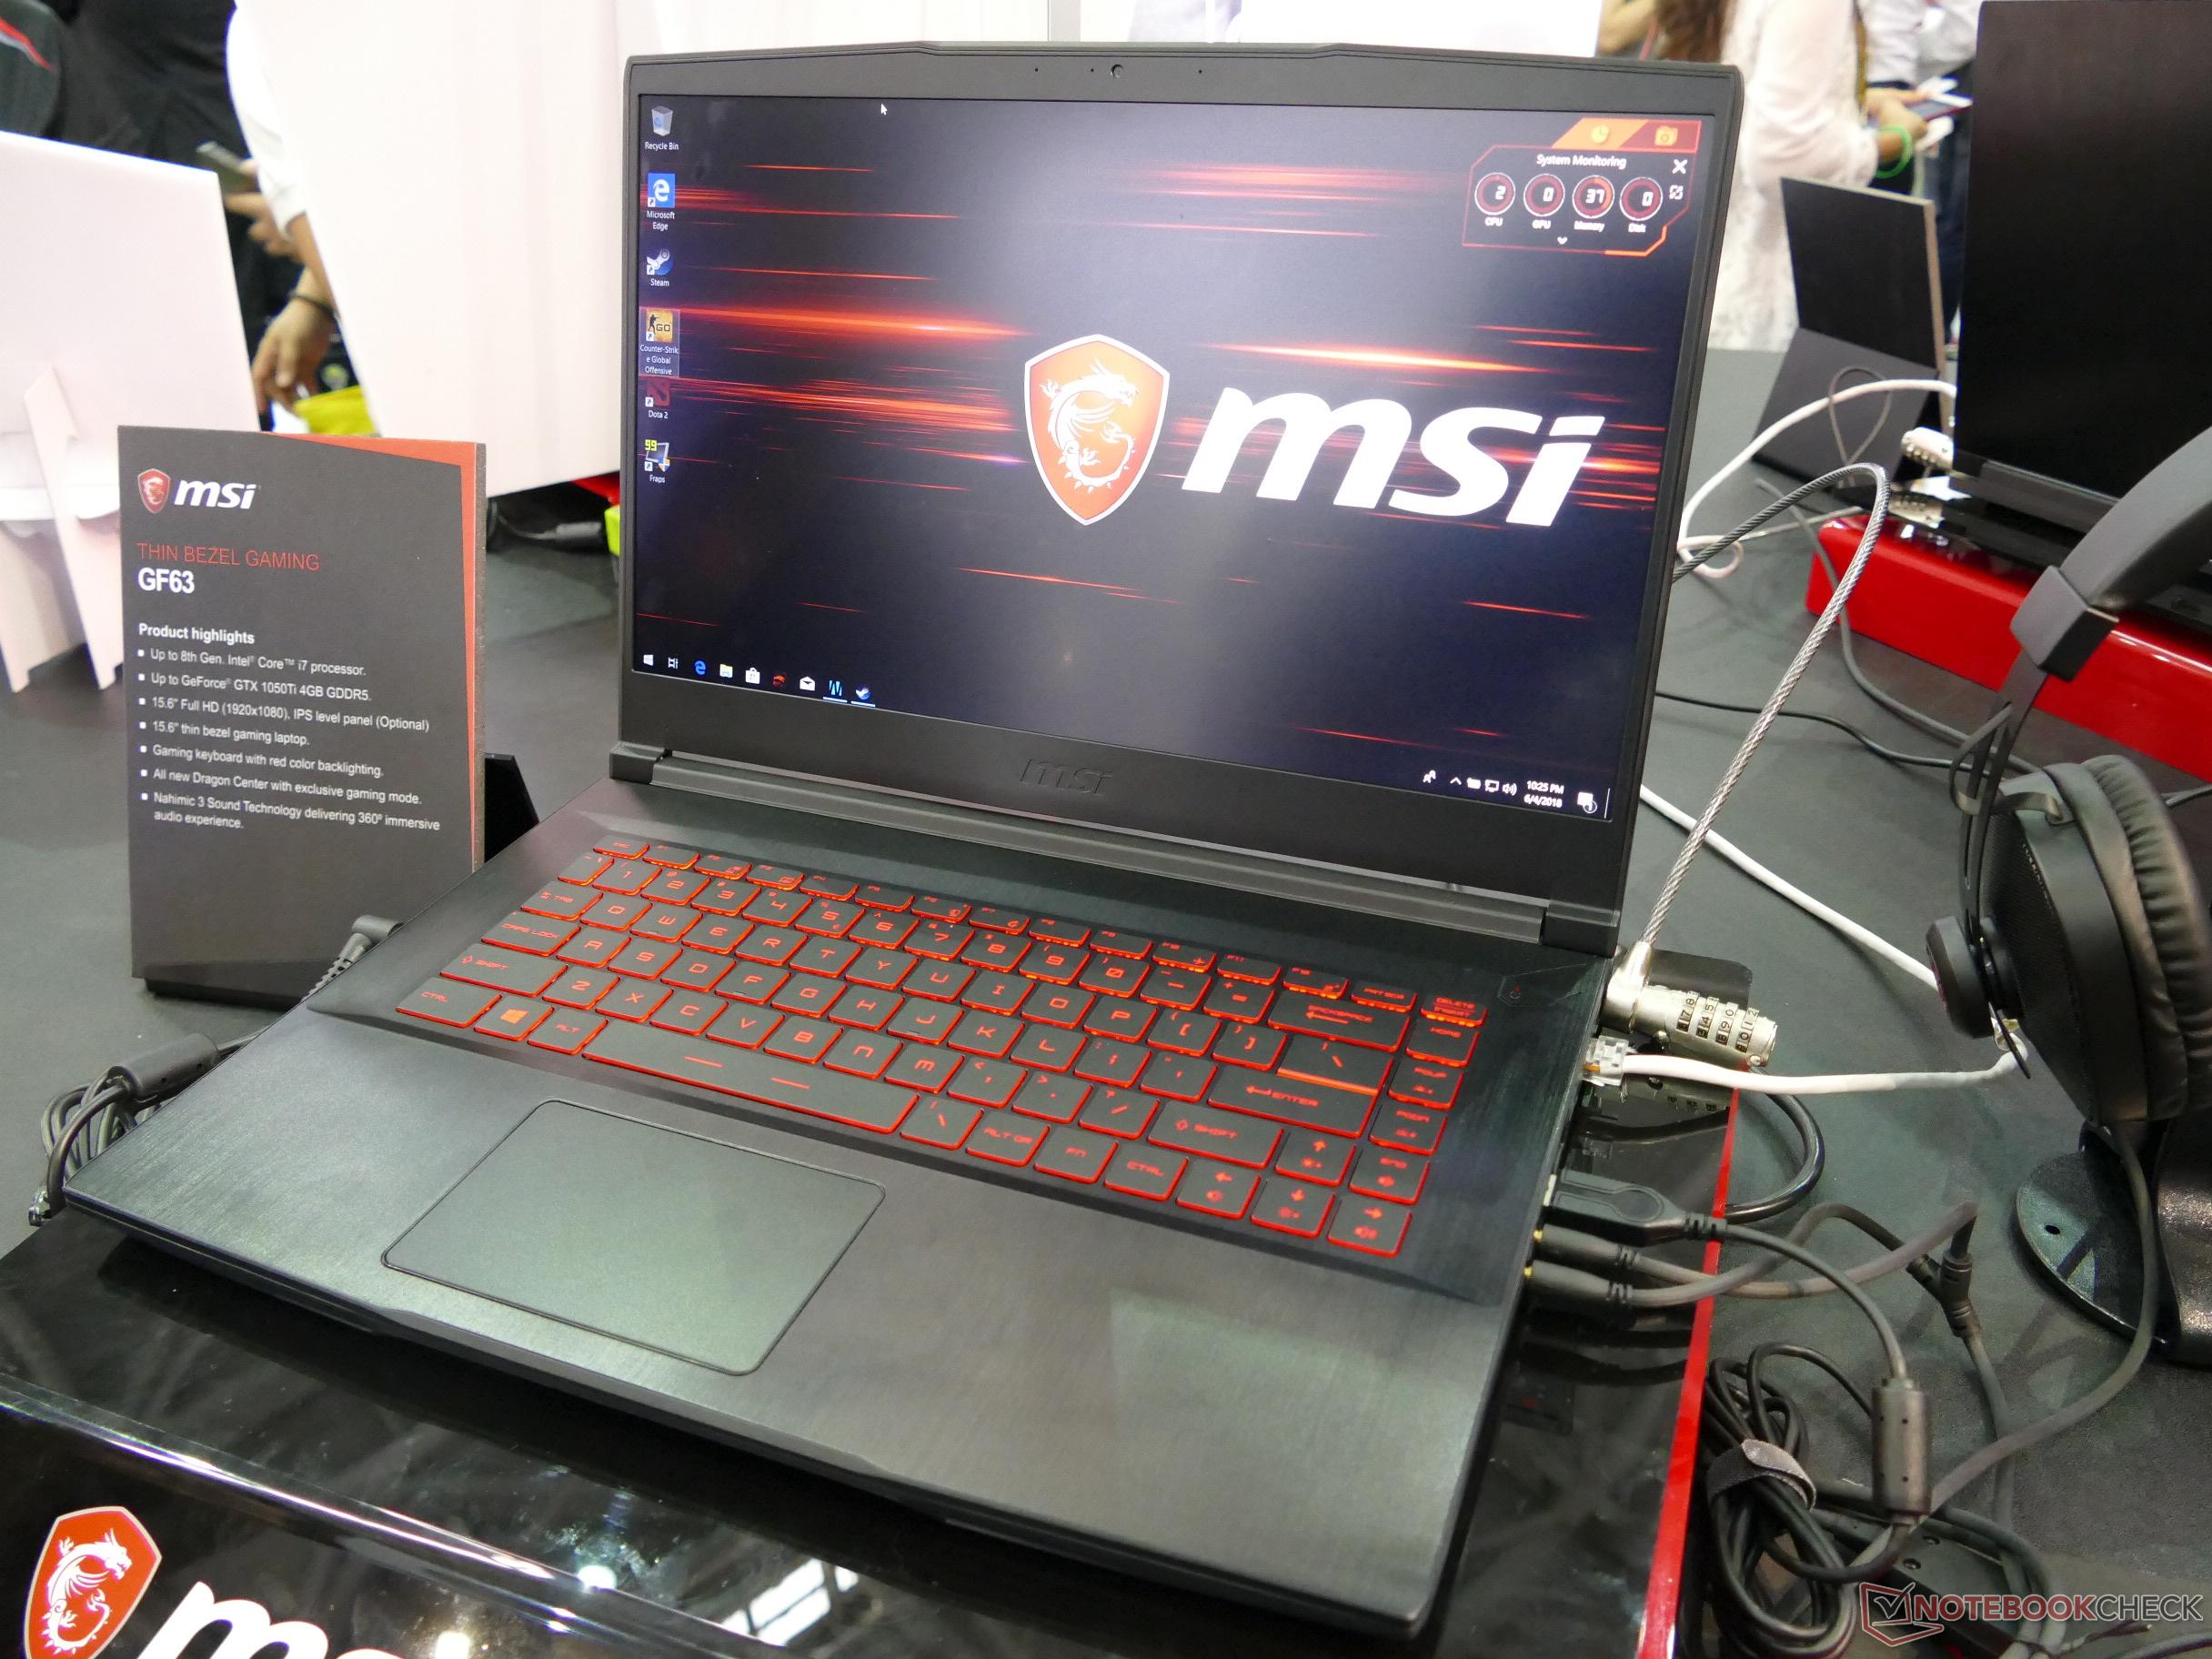 MSI showcases budget GF63 gaming laptop - NotebookCheck.net News